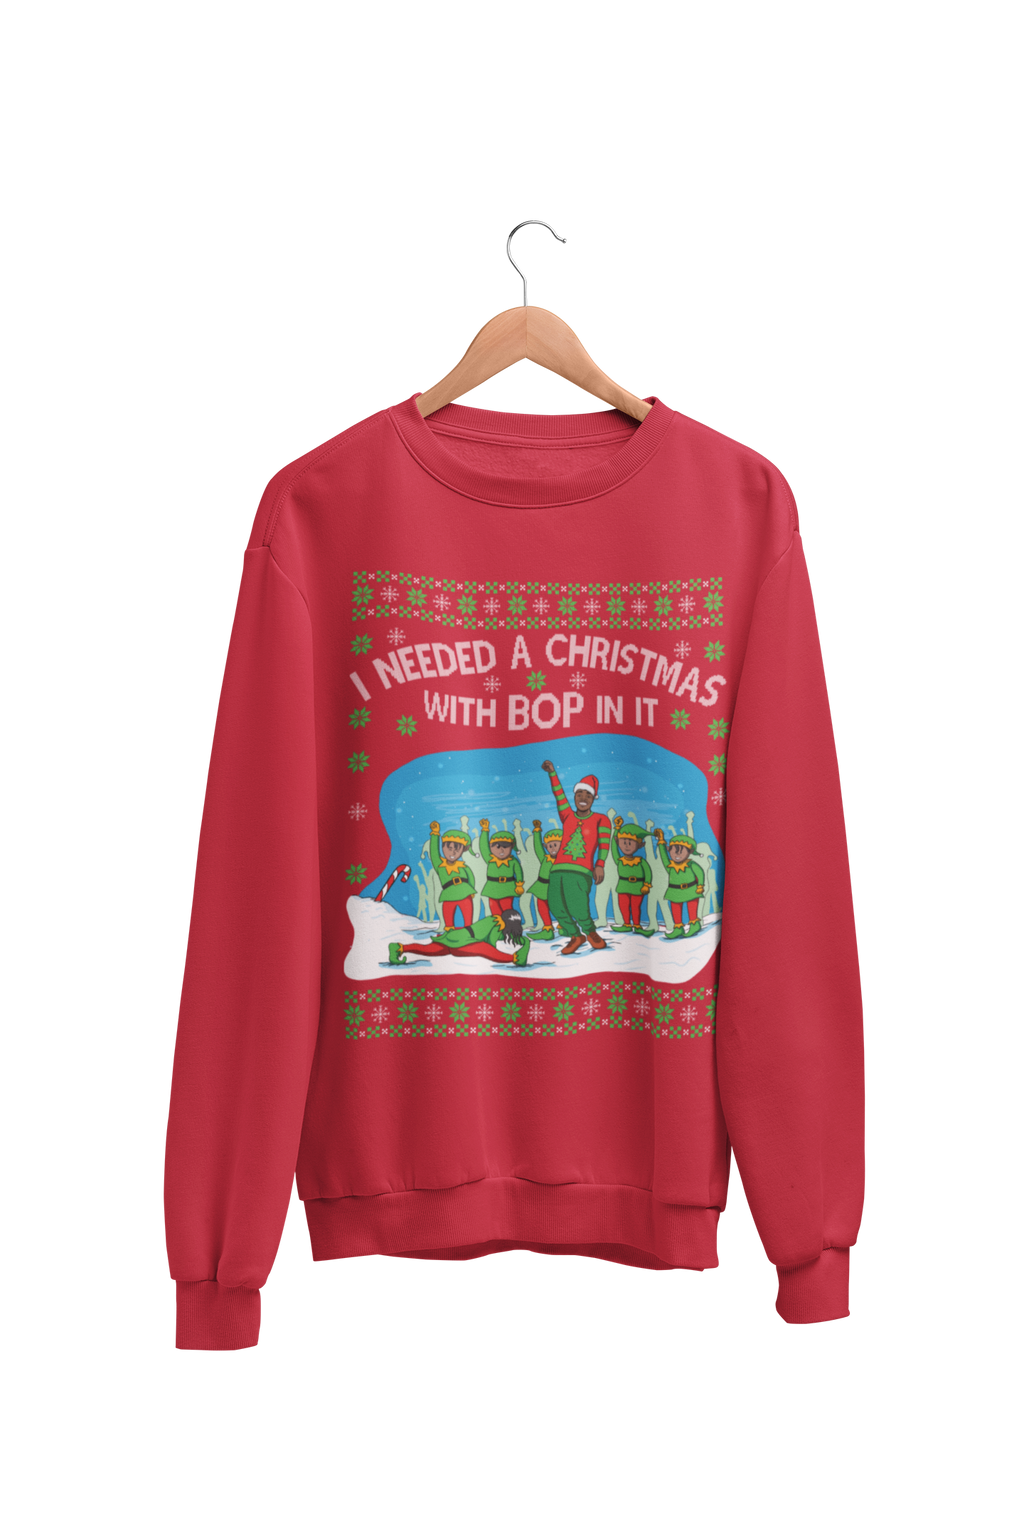 A Christmas with Bop in It Sweatshirt